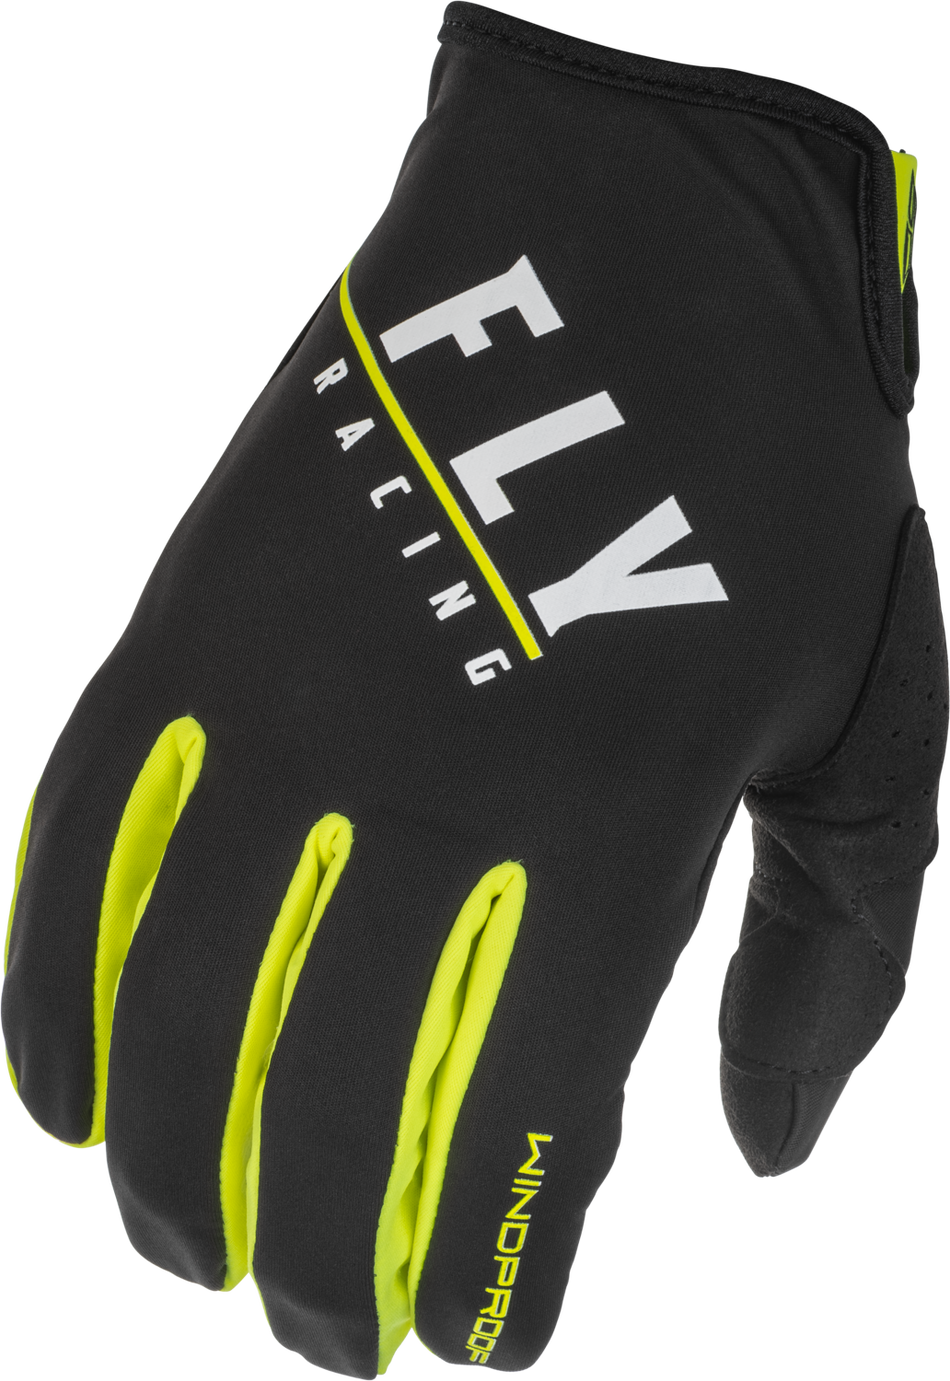 FLY RACING Windproof Gloves Black/Hi-Vis Sz 13 371-14213